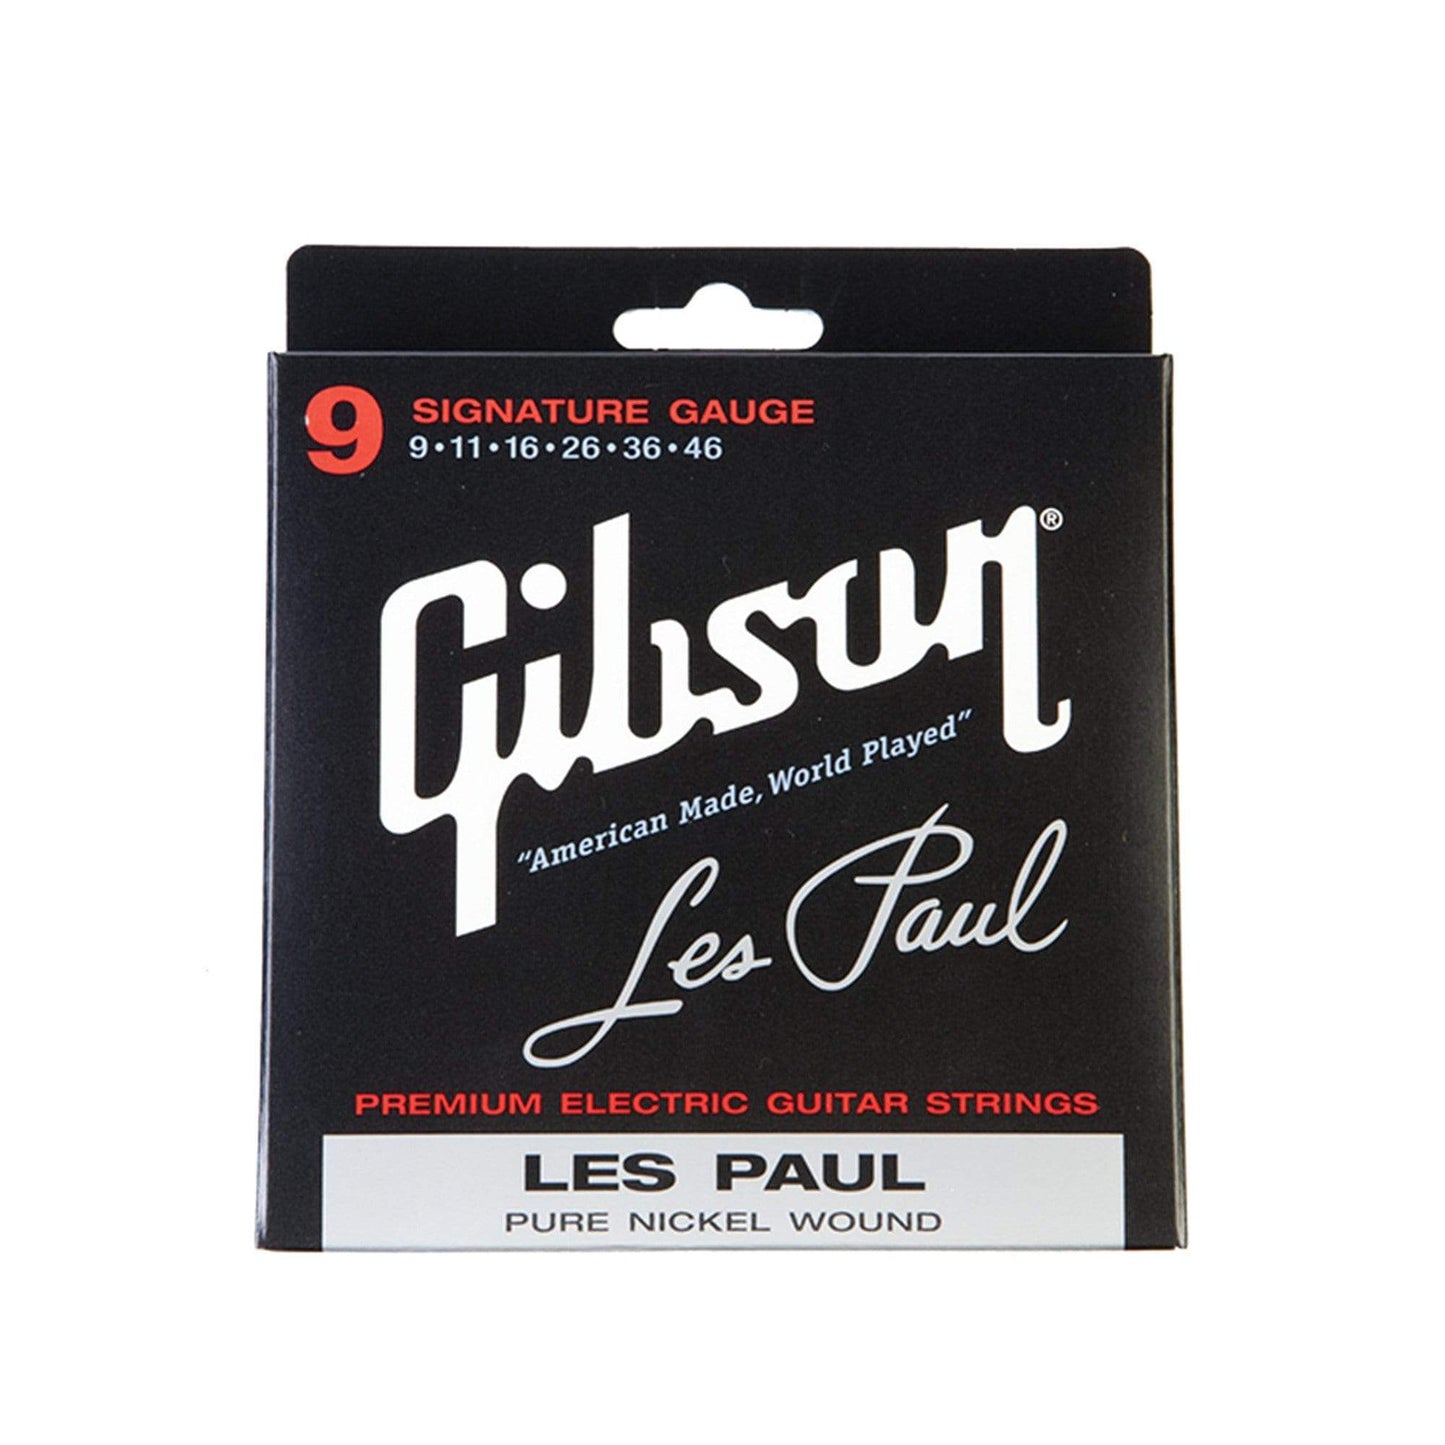 Gibson Gear Les Paul Signature Electric Guitar Strings 9-46 Accessories / Strings / Guitar Strings